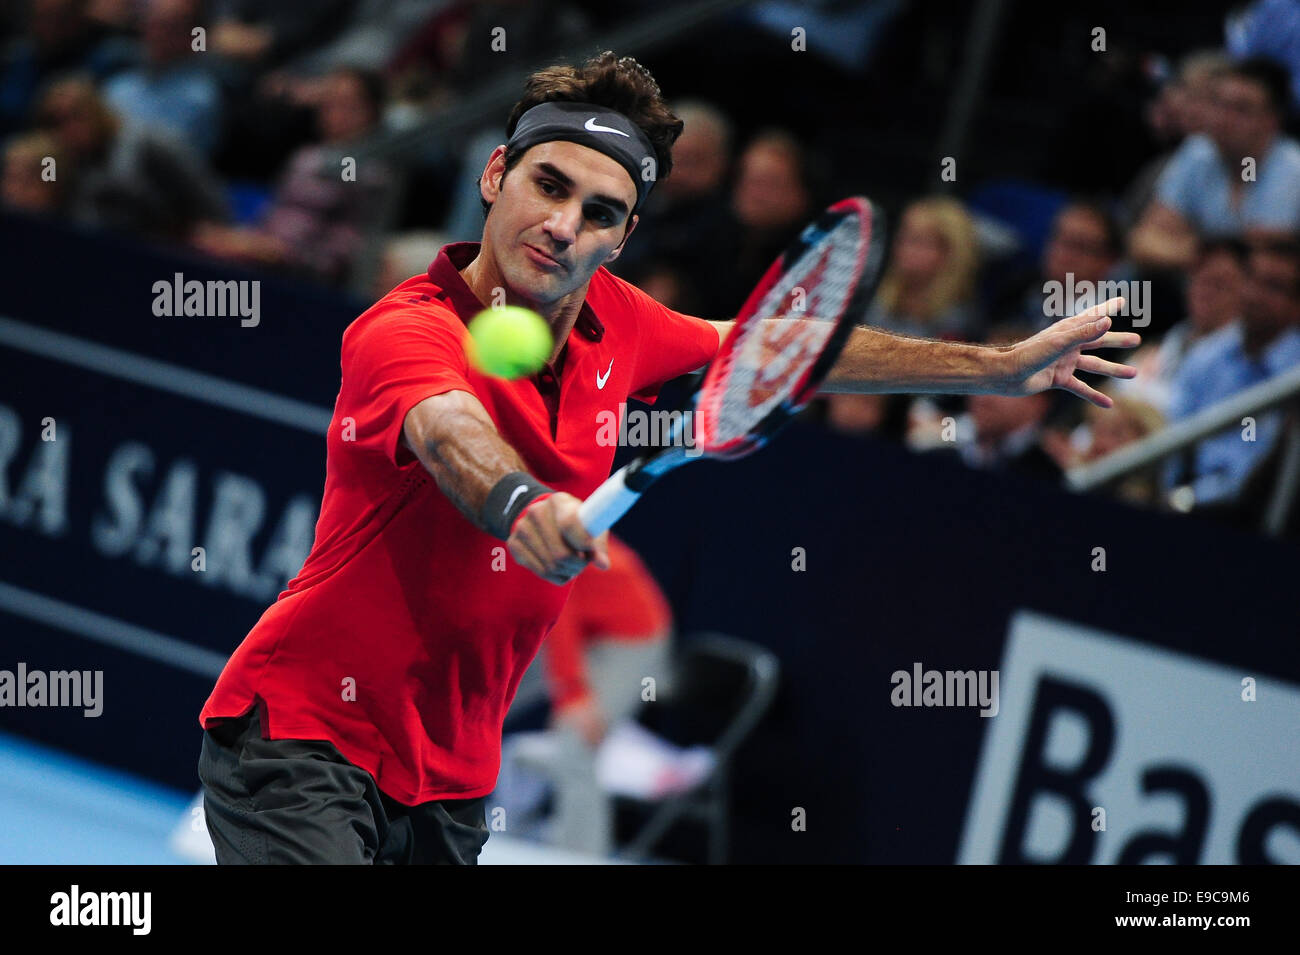 Basel, Svizzera. 24 ottobre, 2014. Roger Federer durante il trimestre finale del Swiss interni a St. Jakobshalle. Foto: Miroslav Dakov/ Alamy Live News Foto Stock